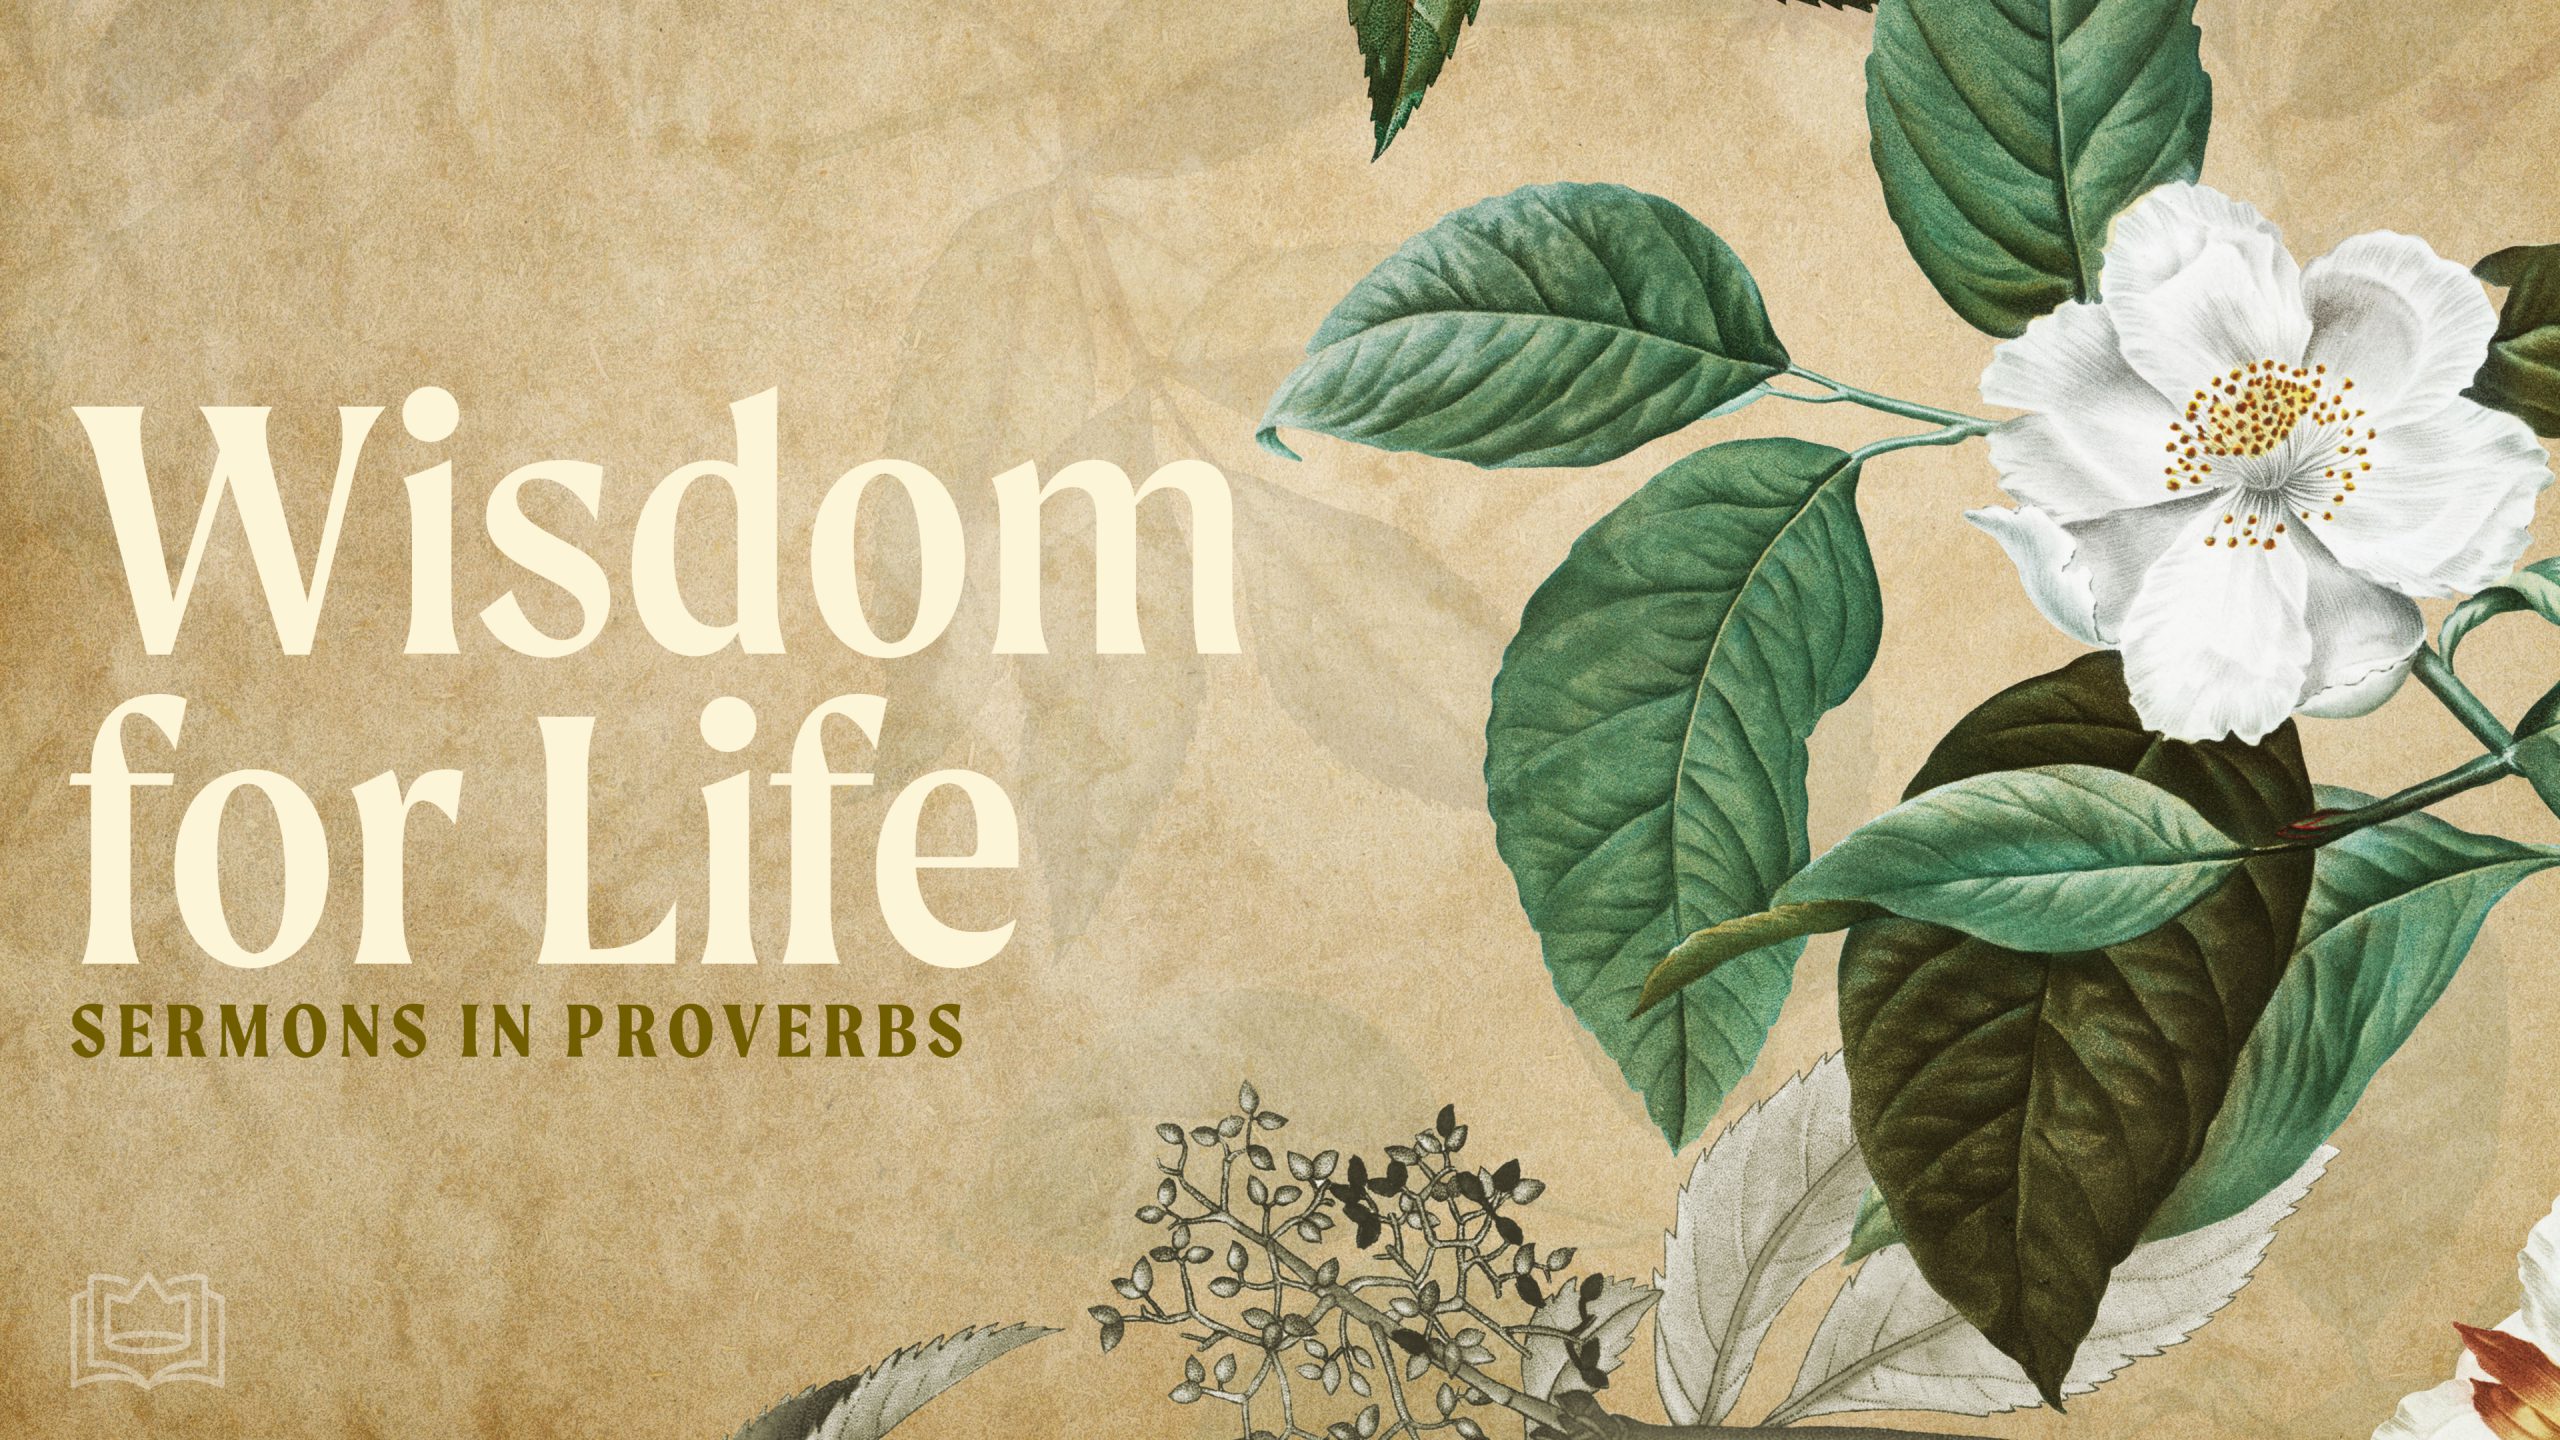 Wisdom for Life - Sermons on Proverbs at ECC